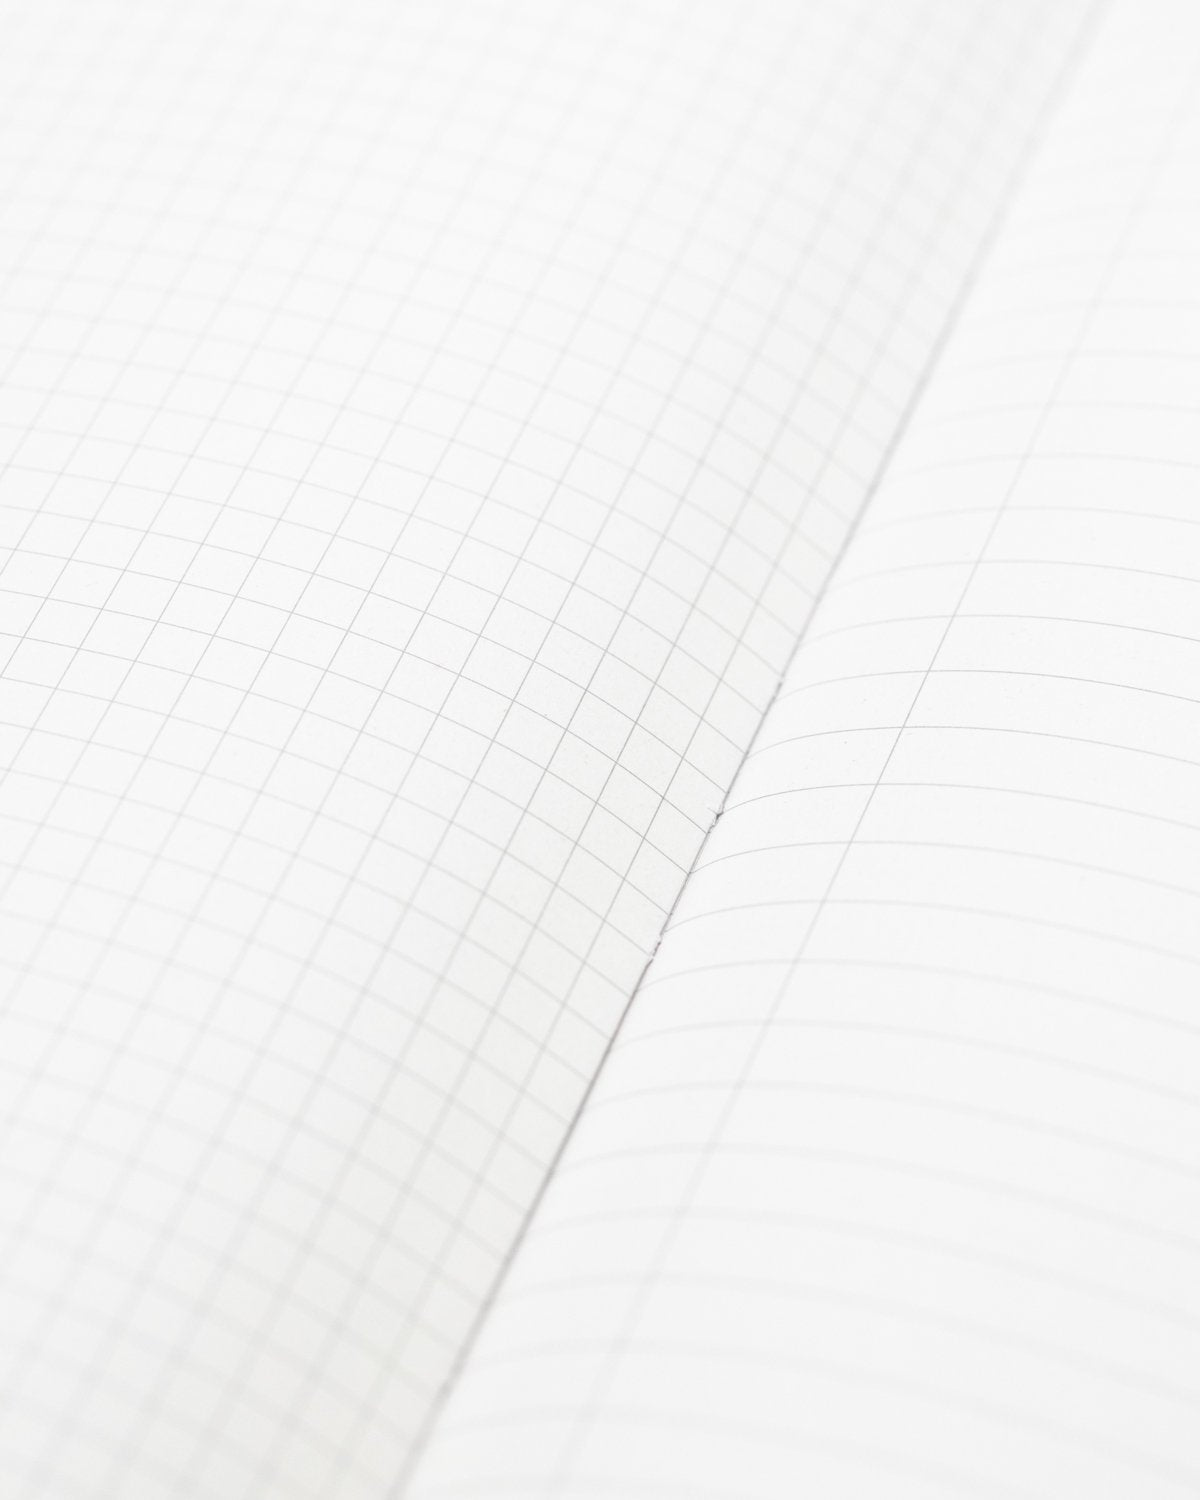 Deep Sea Hardcover Notebook - Lined/Grid